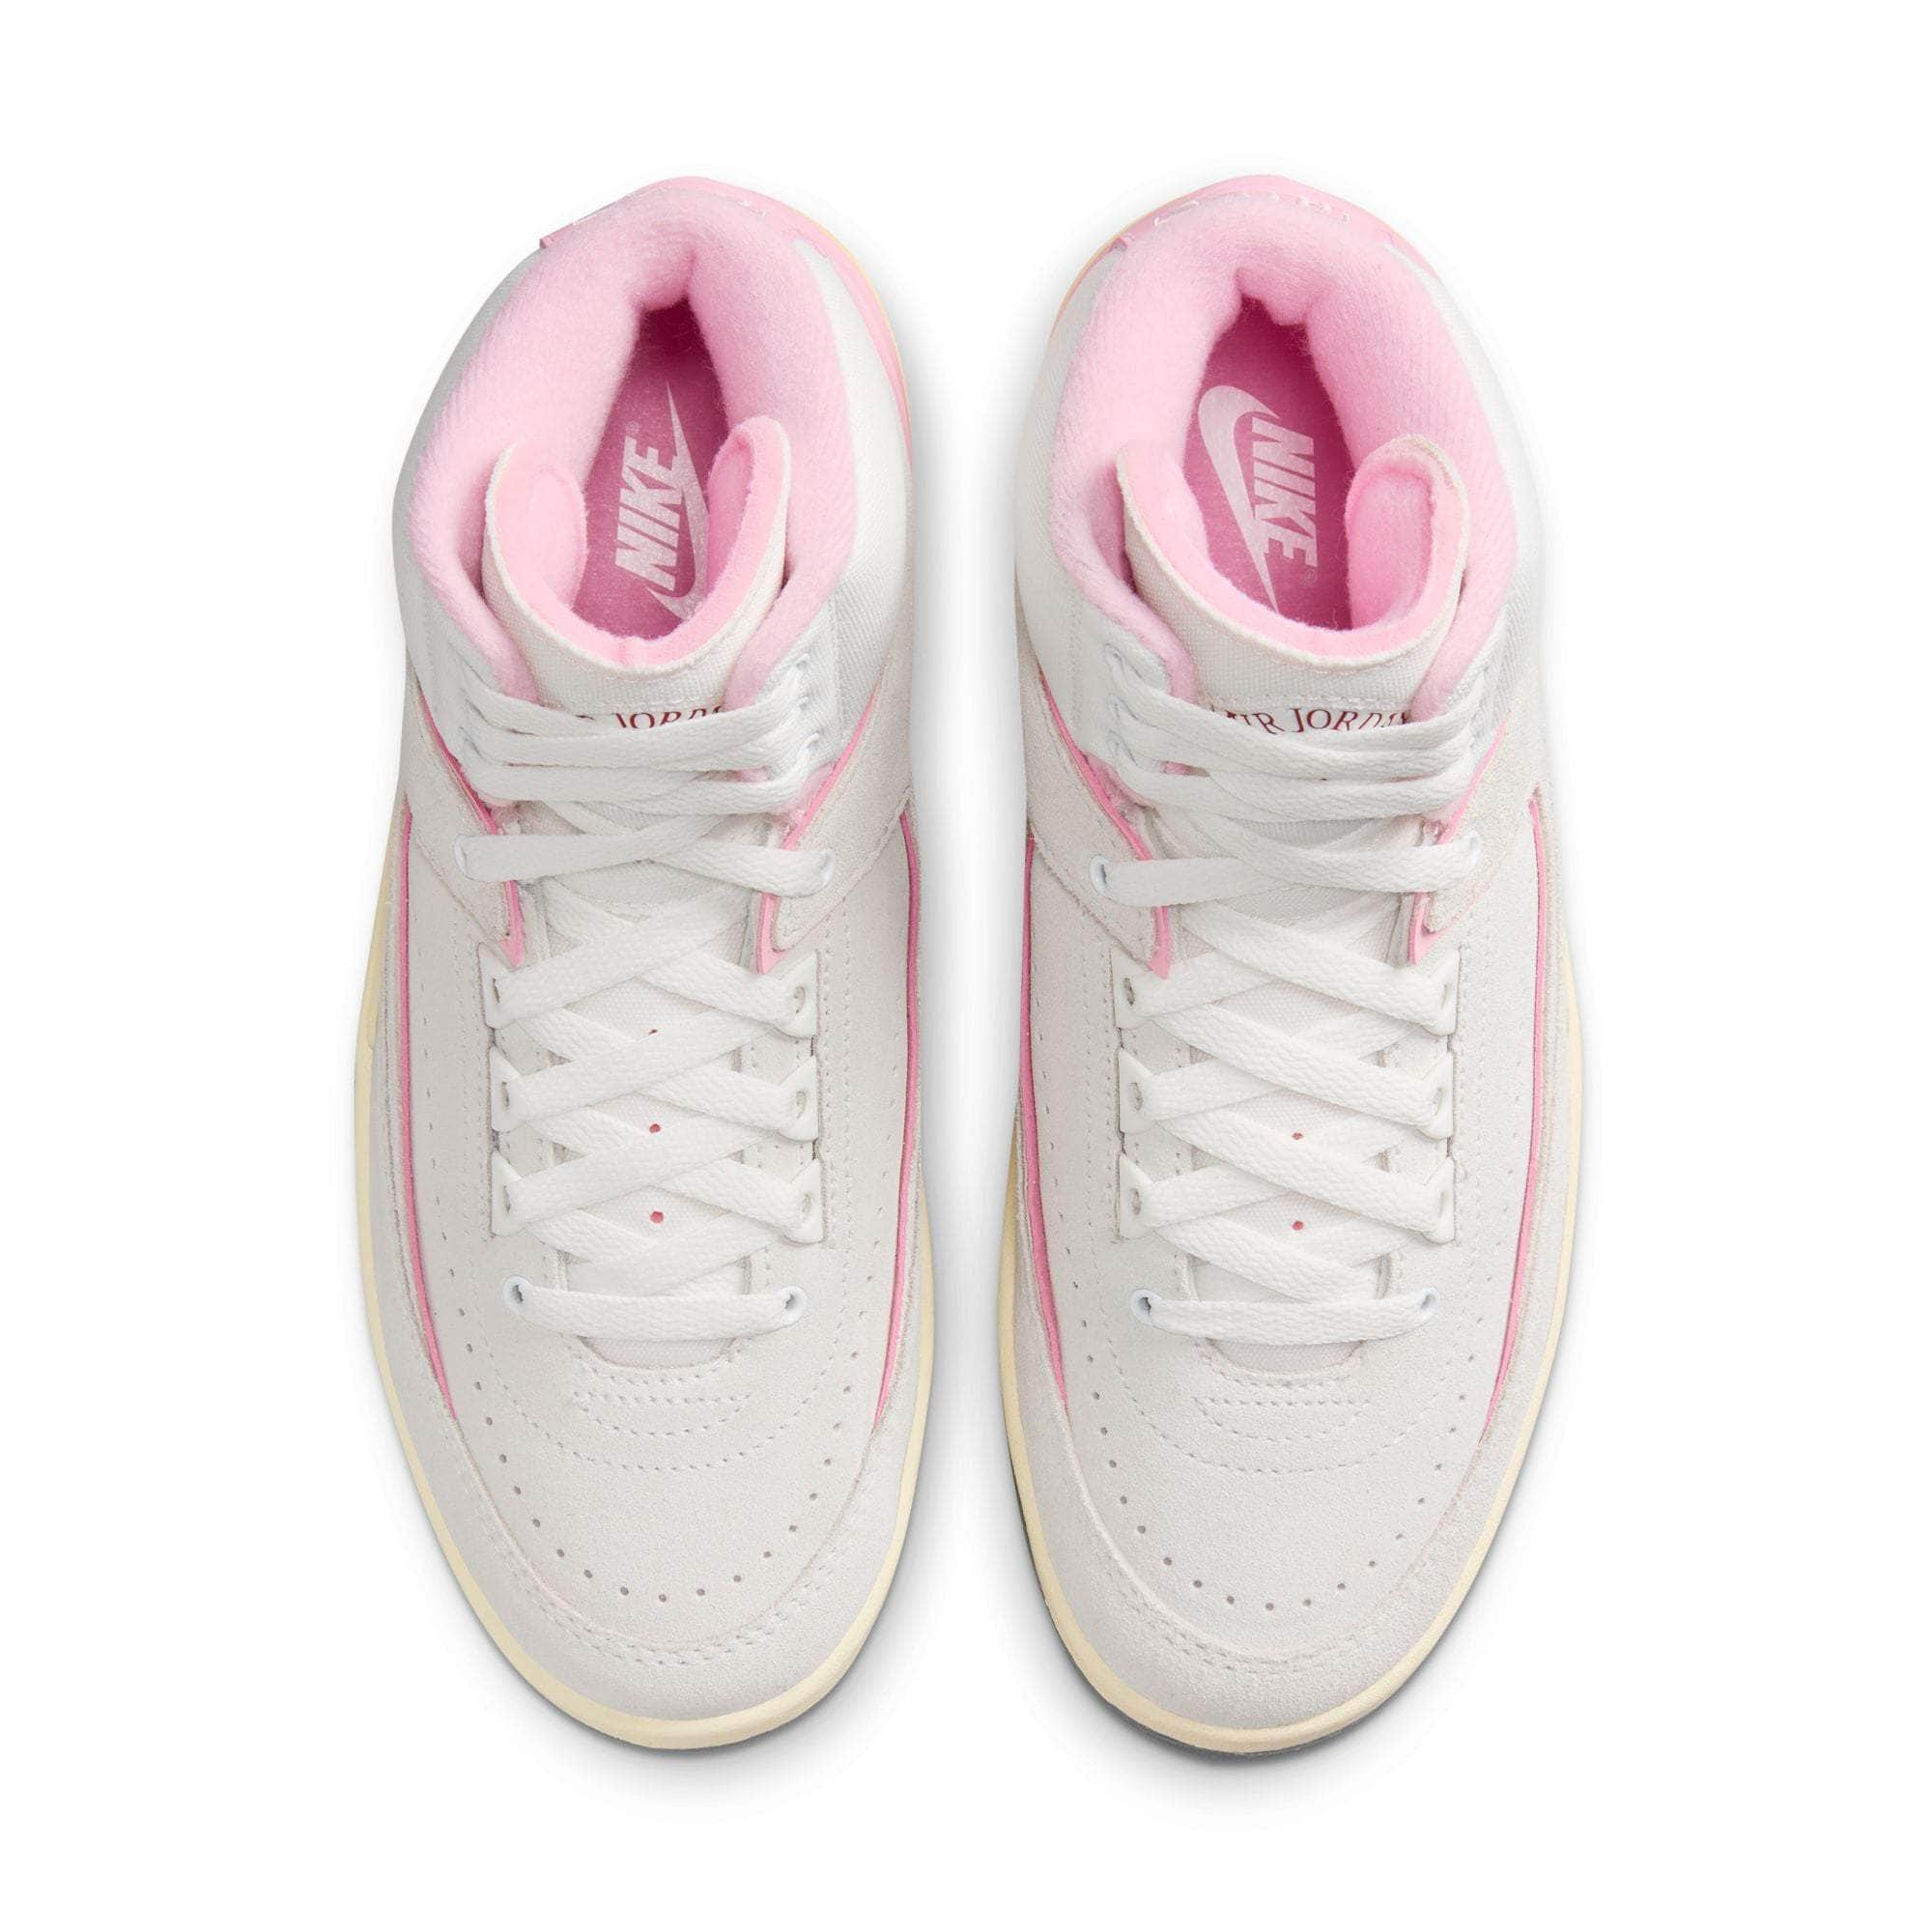 Air Jordan FOOTWEAR Air Jordan 2 “Soft Pink” - Women's